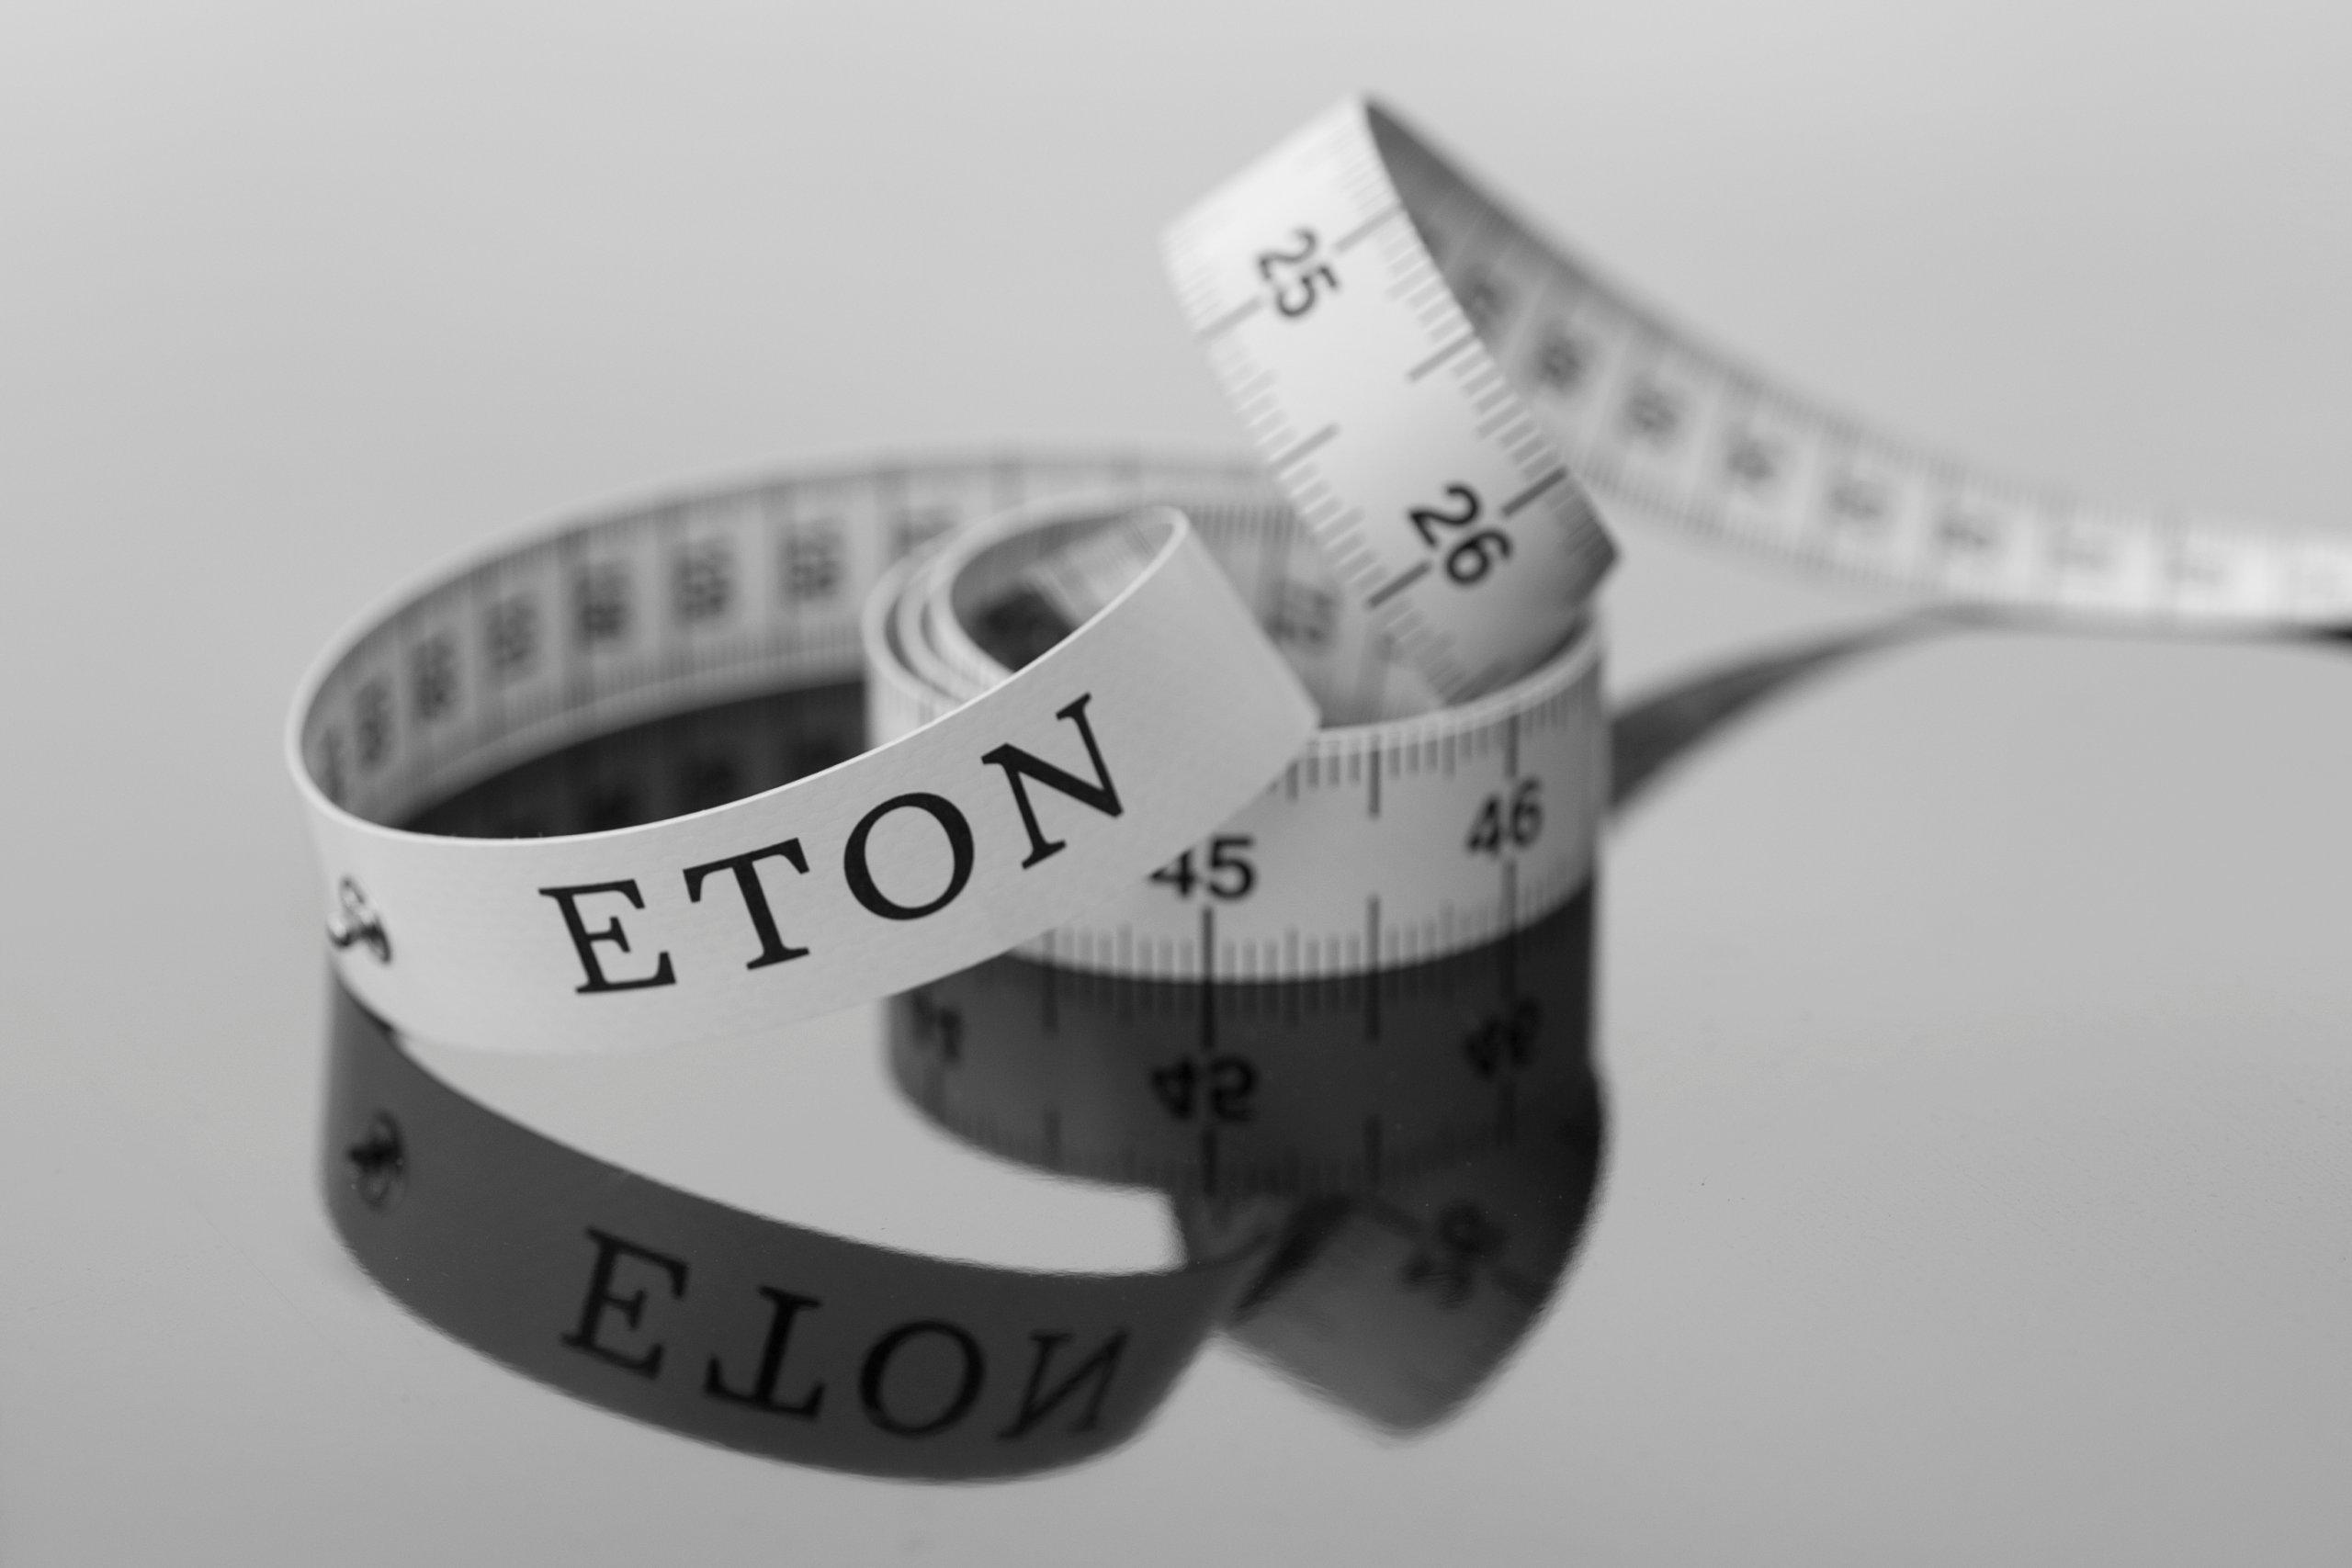 image shows eton shirts tape measure